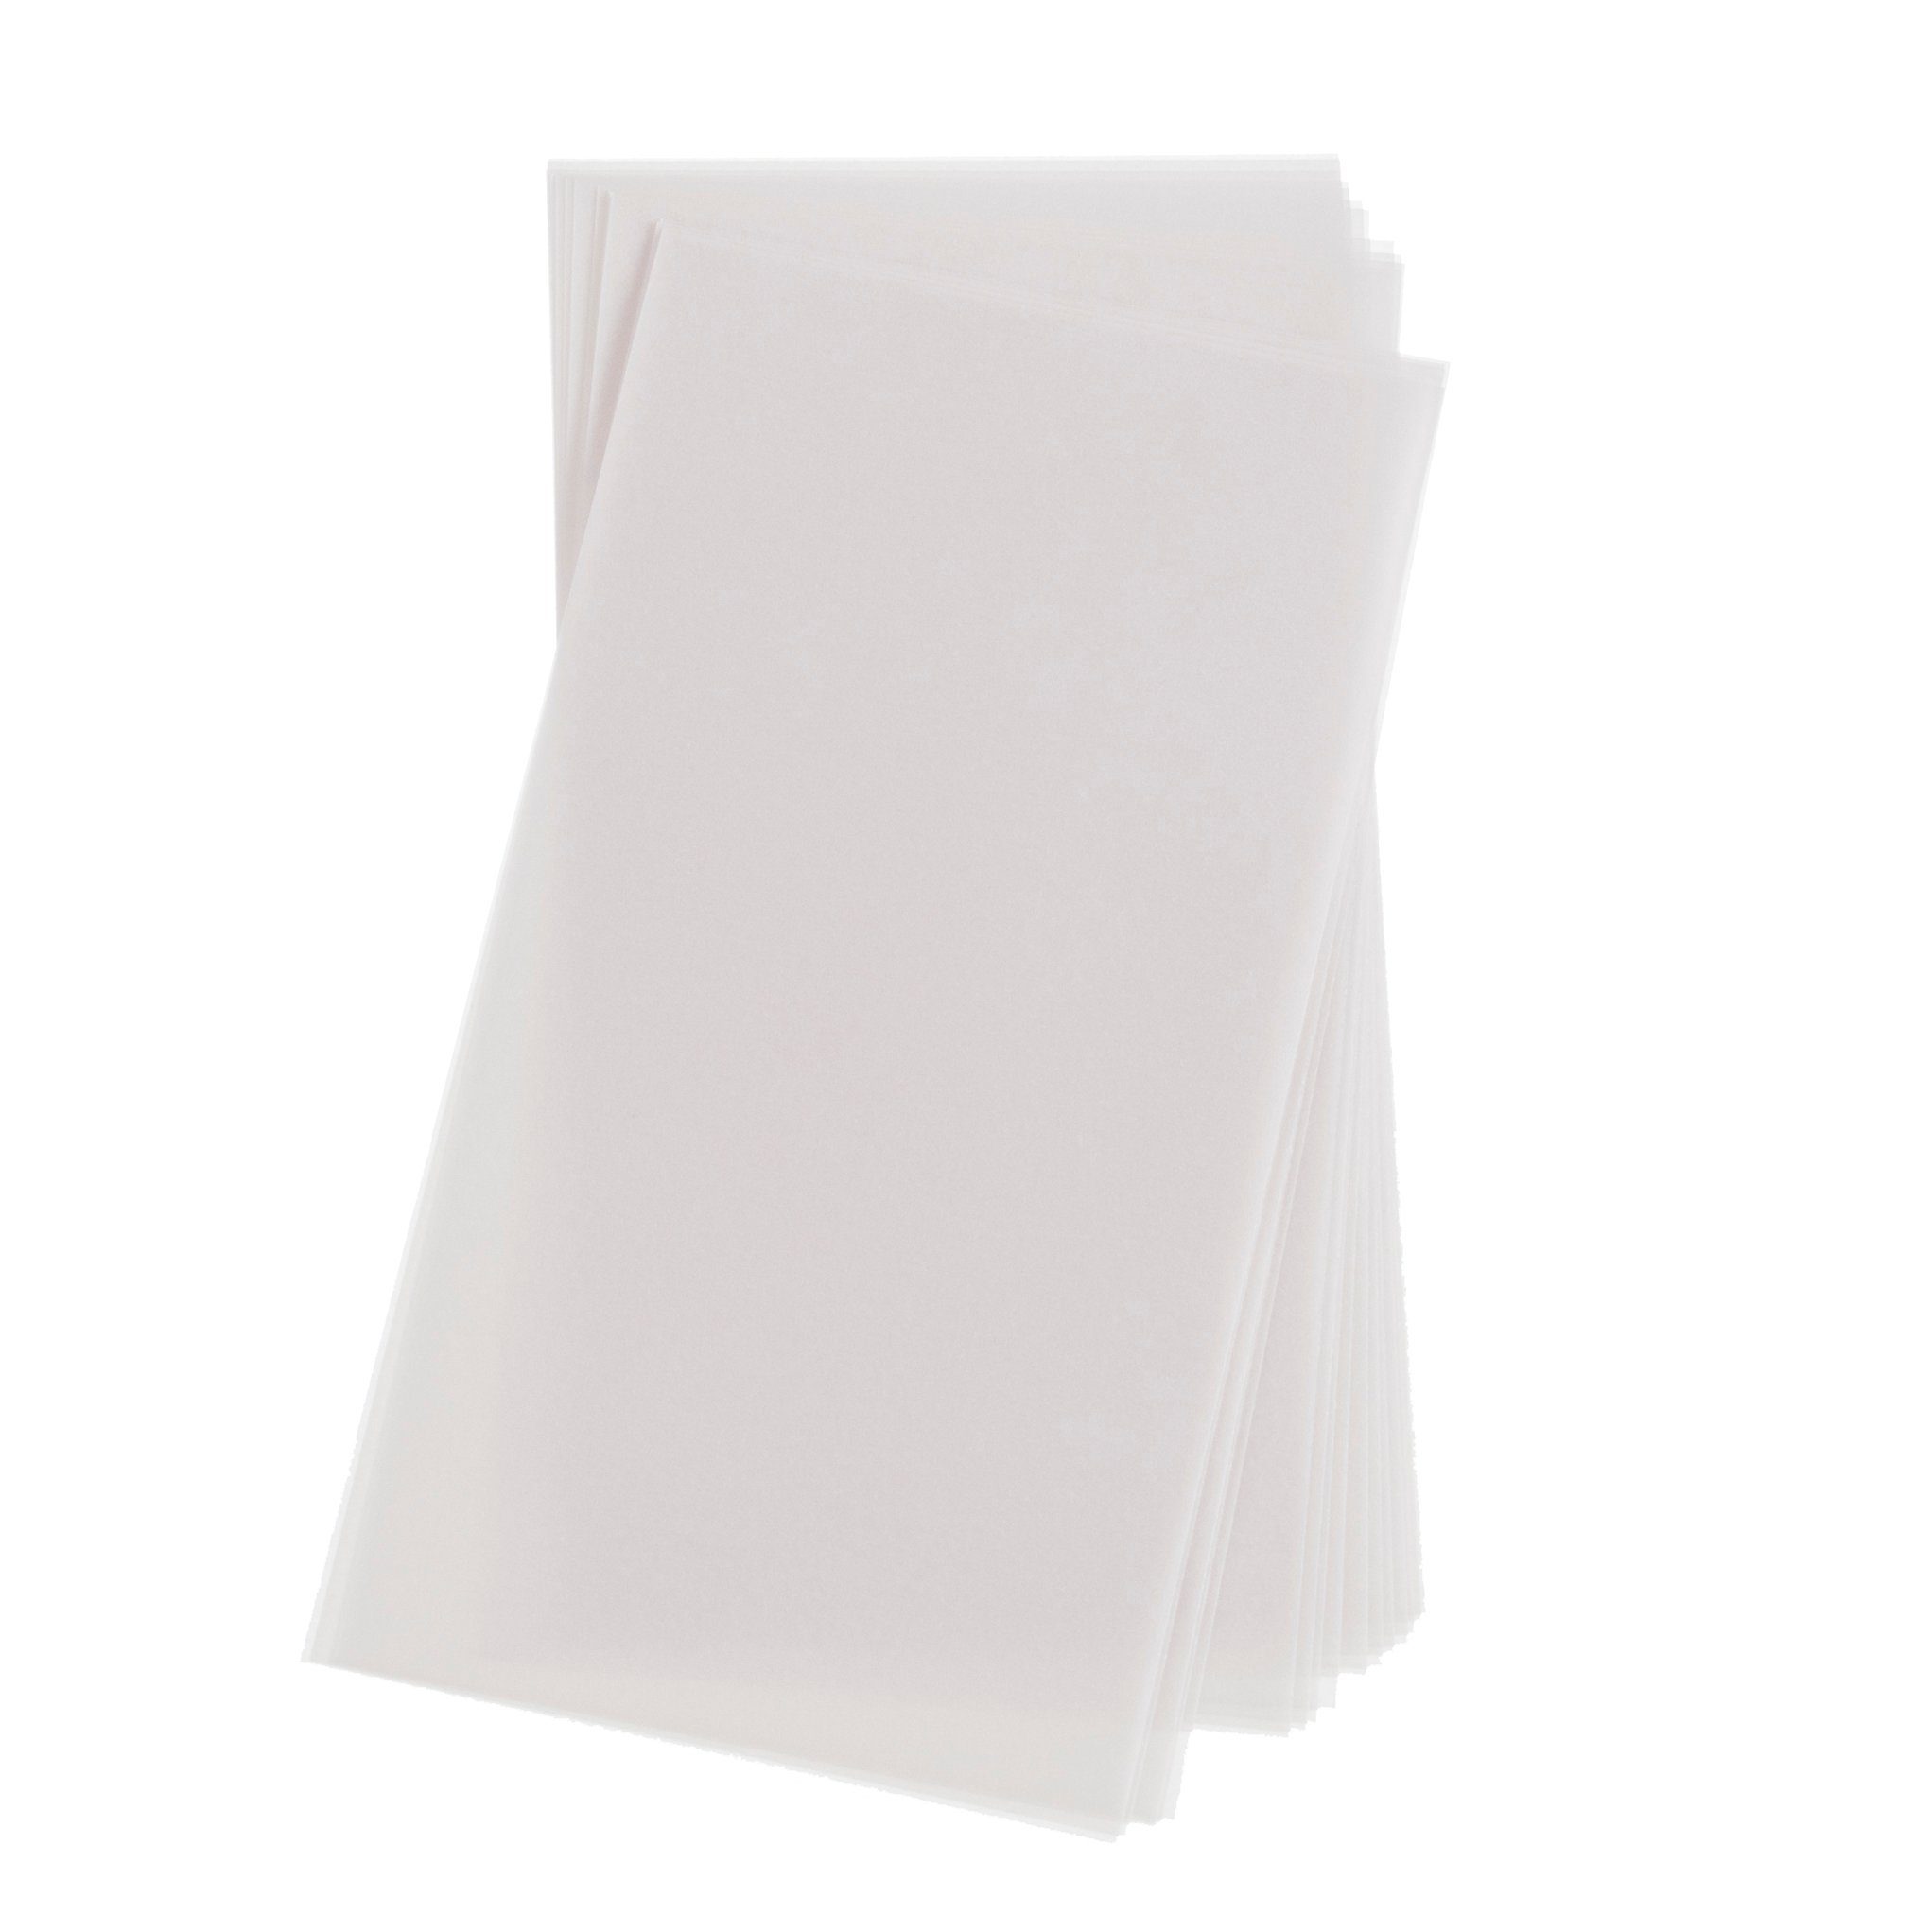 Extra Stark Transparentpapier Falten, zum efco Kraftpapier